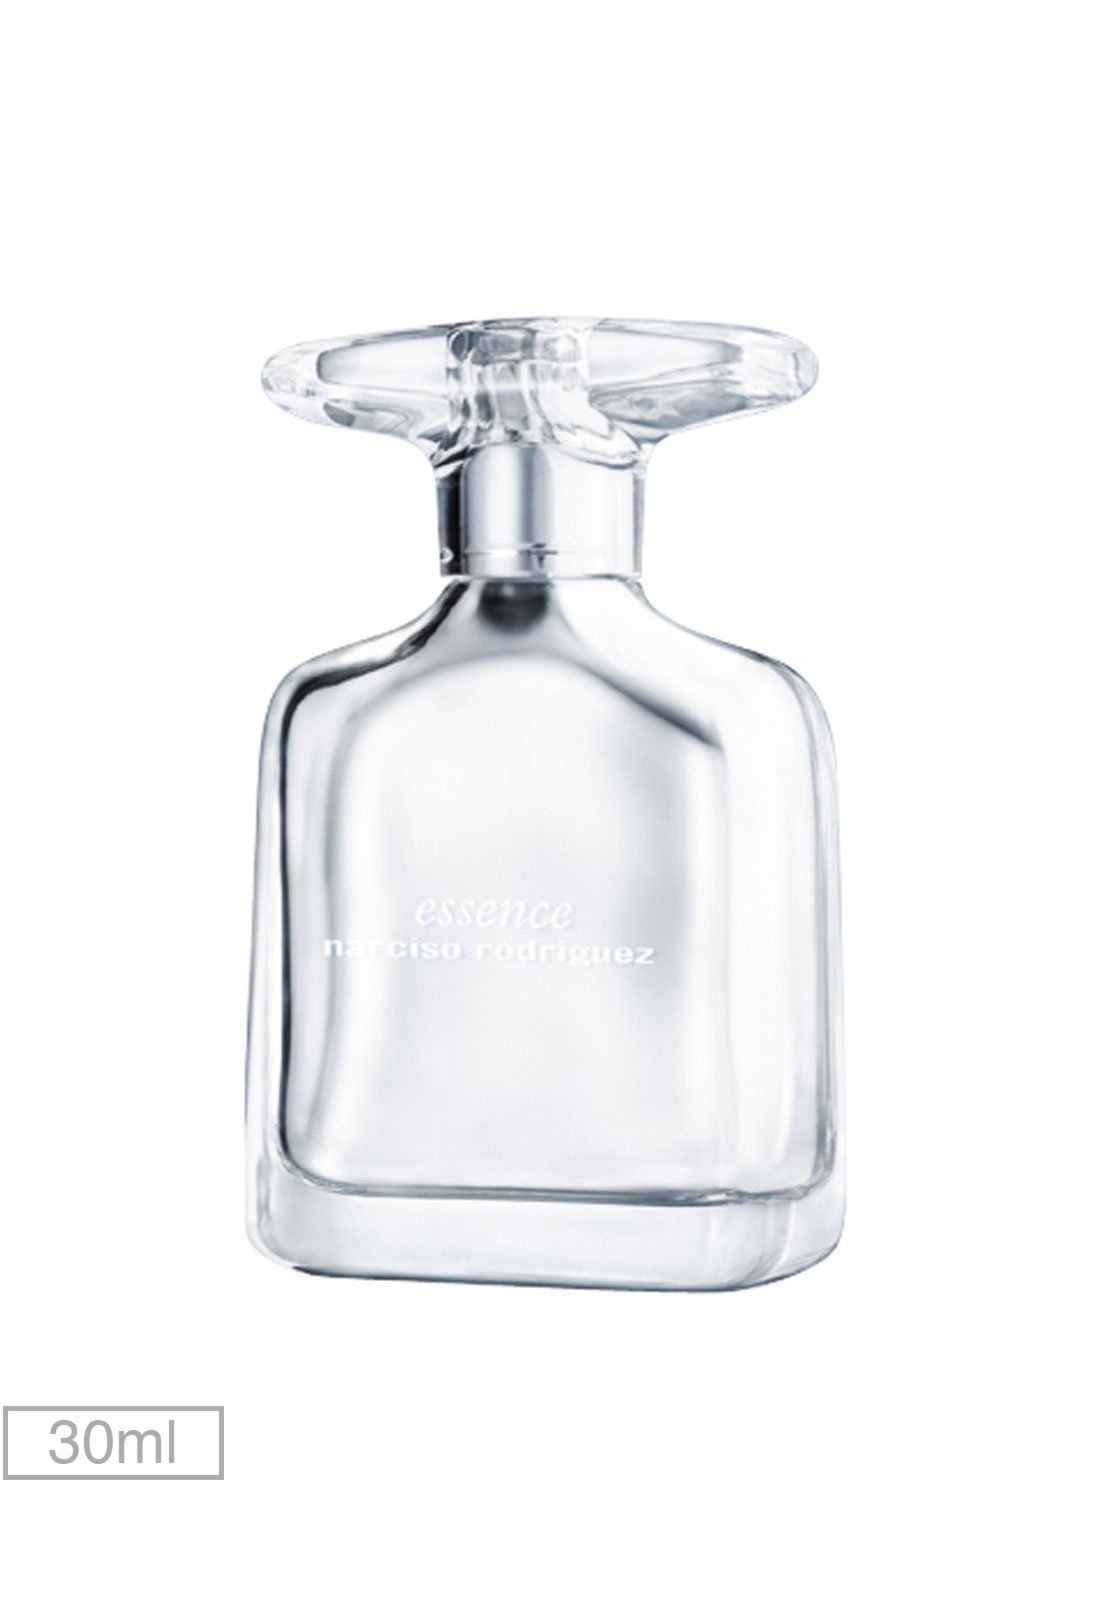 Perfume Essence Narciso Rodriguez 30ml - Compre Agora